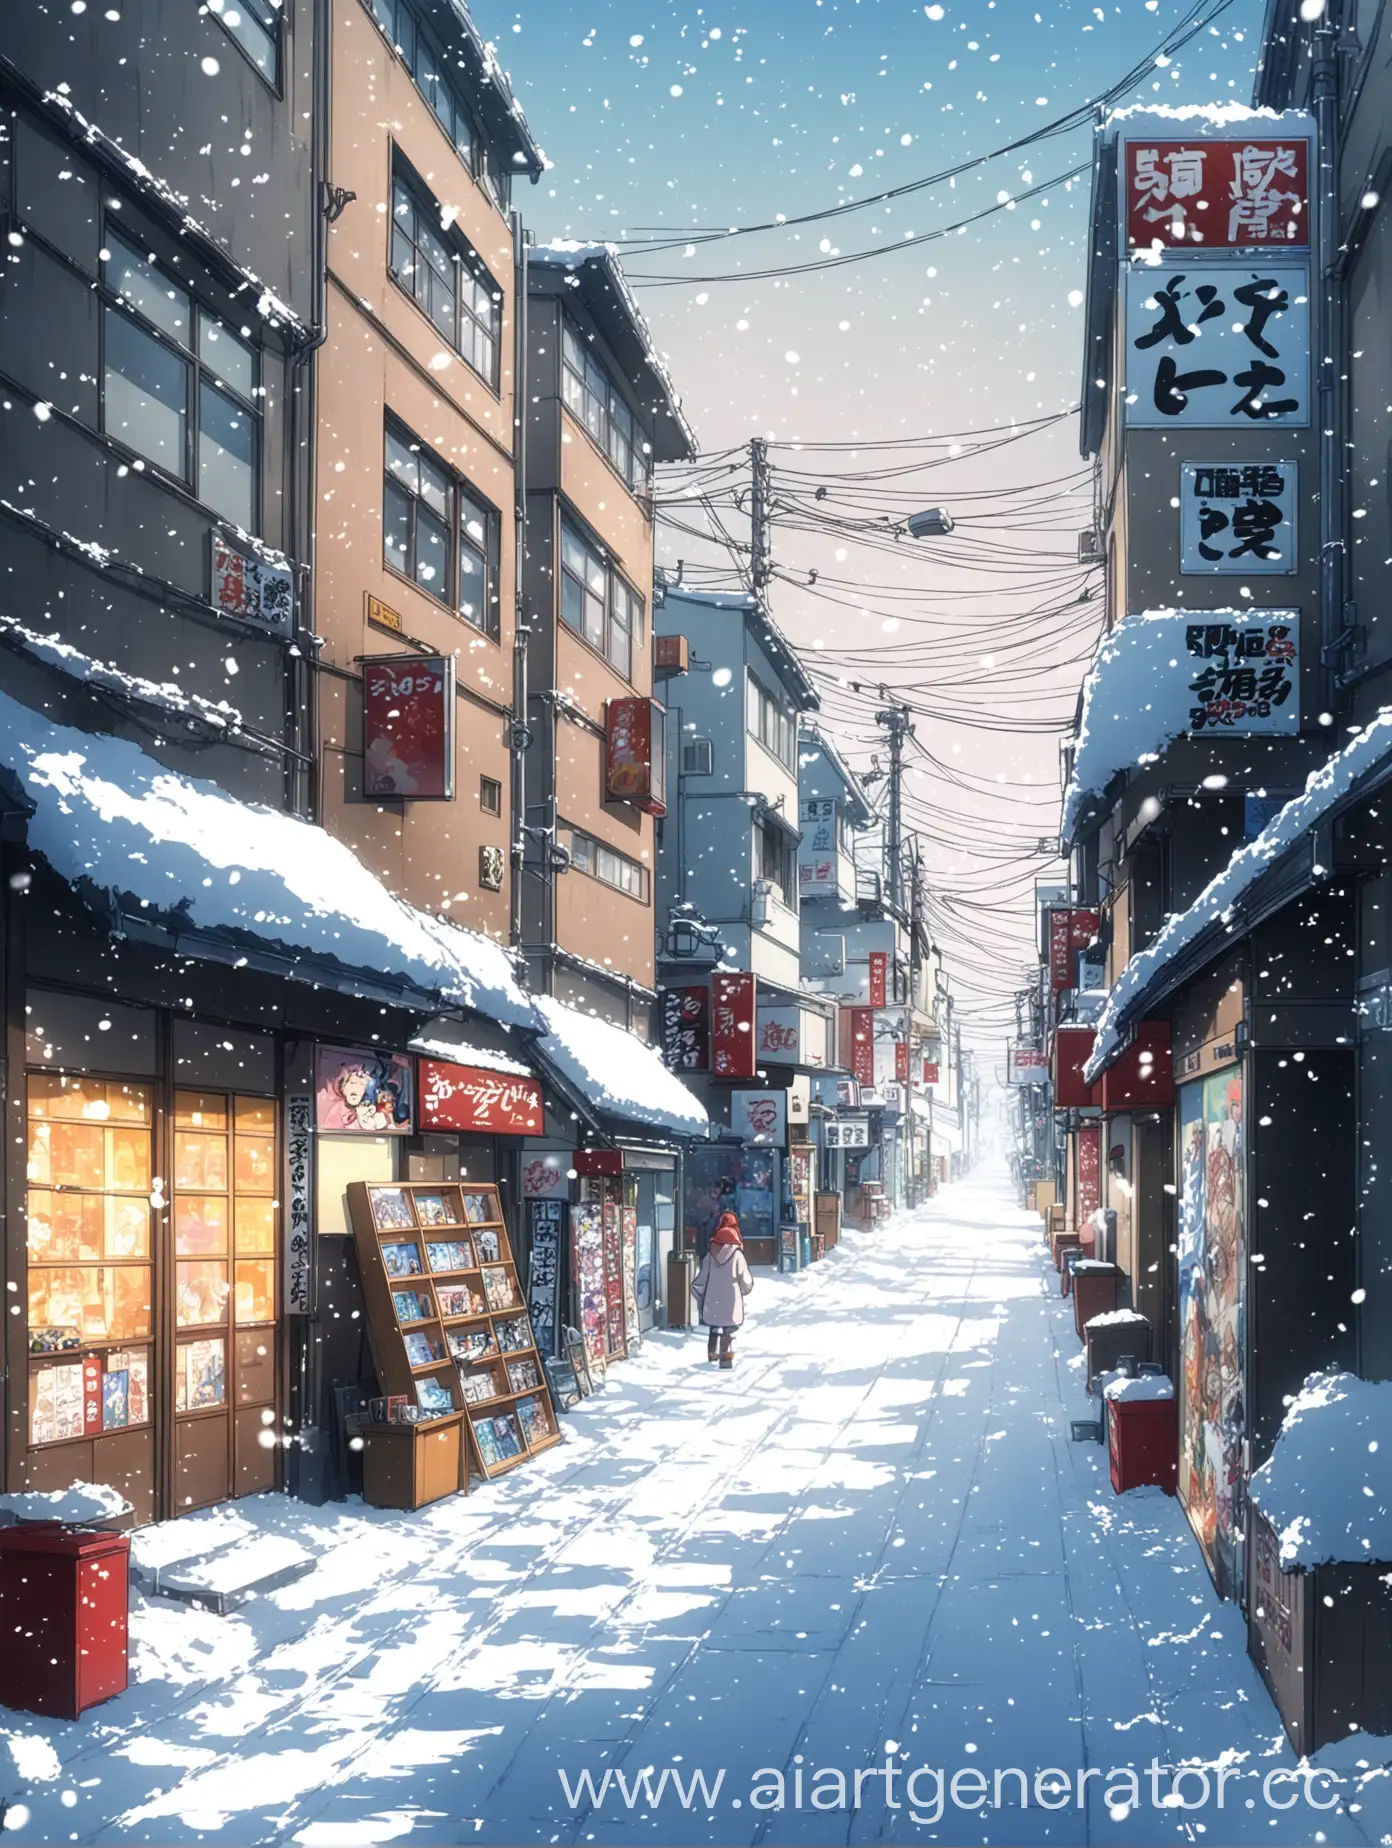 Anime-Winter-Street-Scene-Urban-Setting-with-Snow